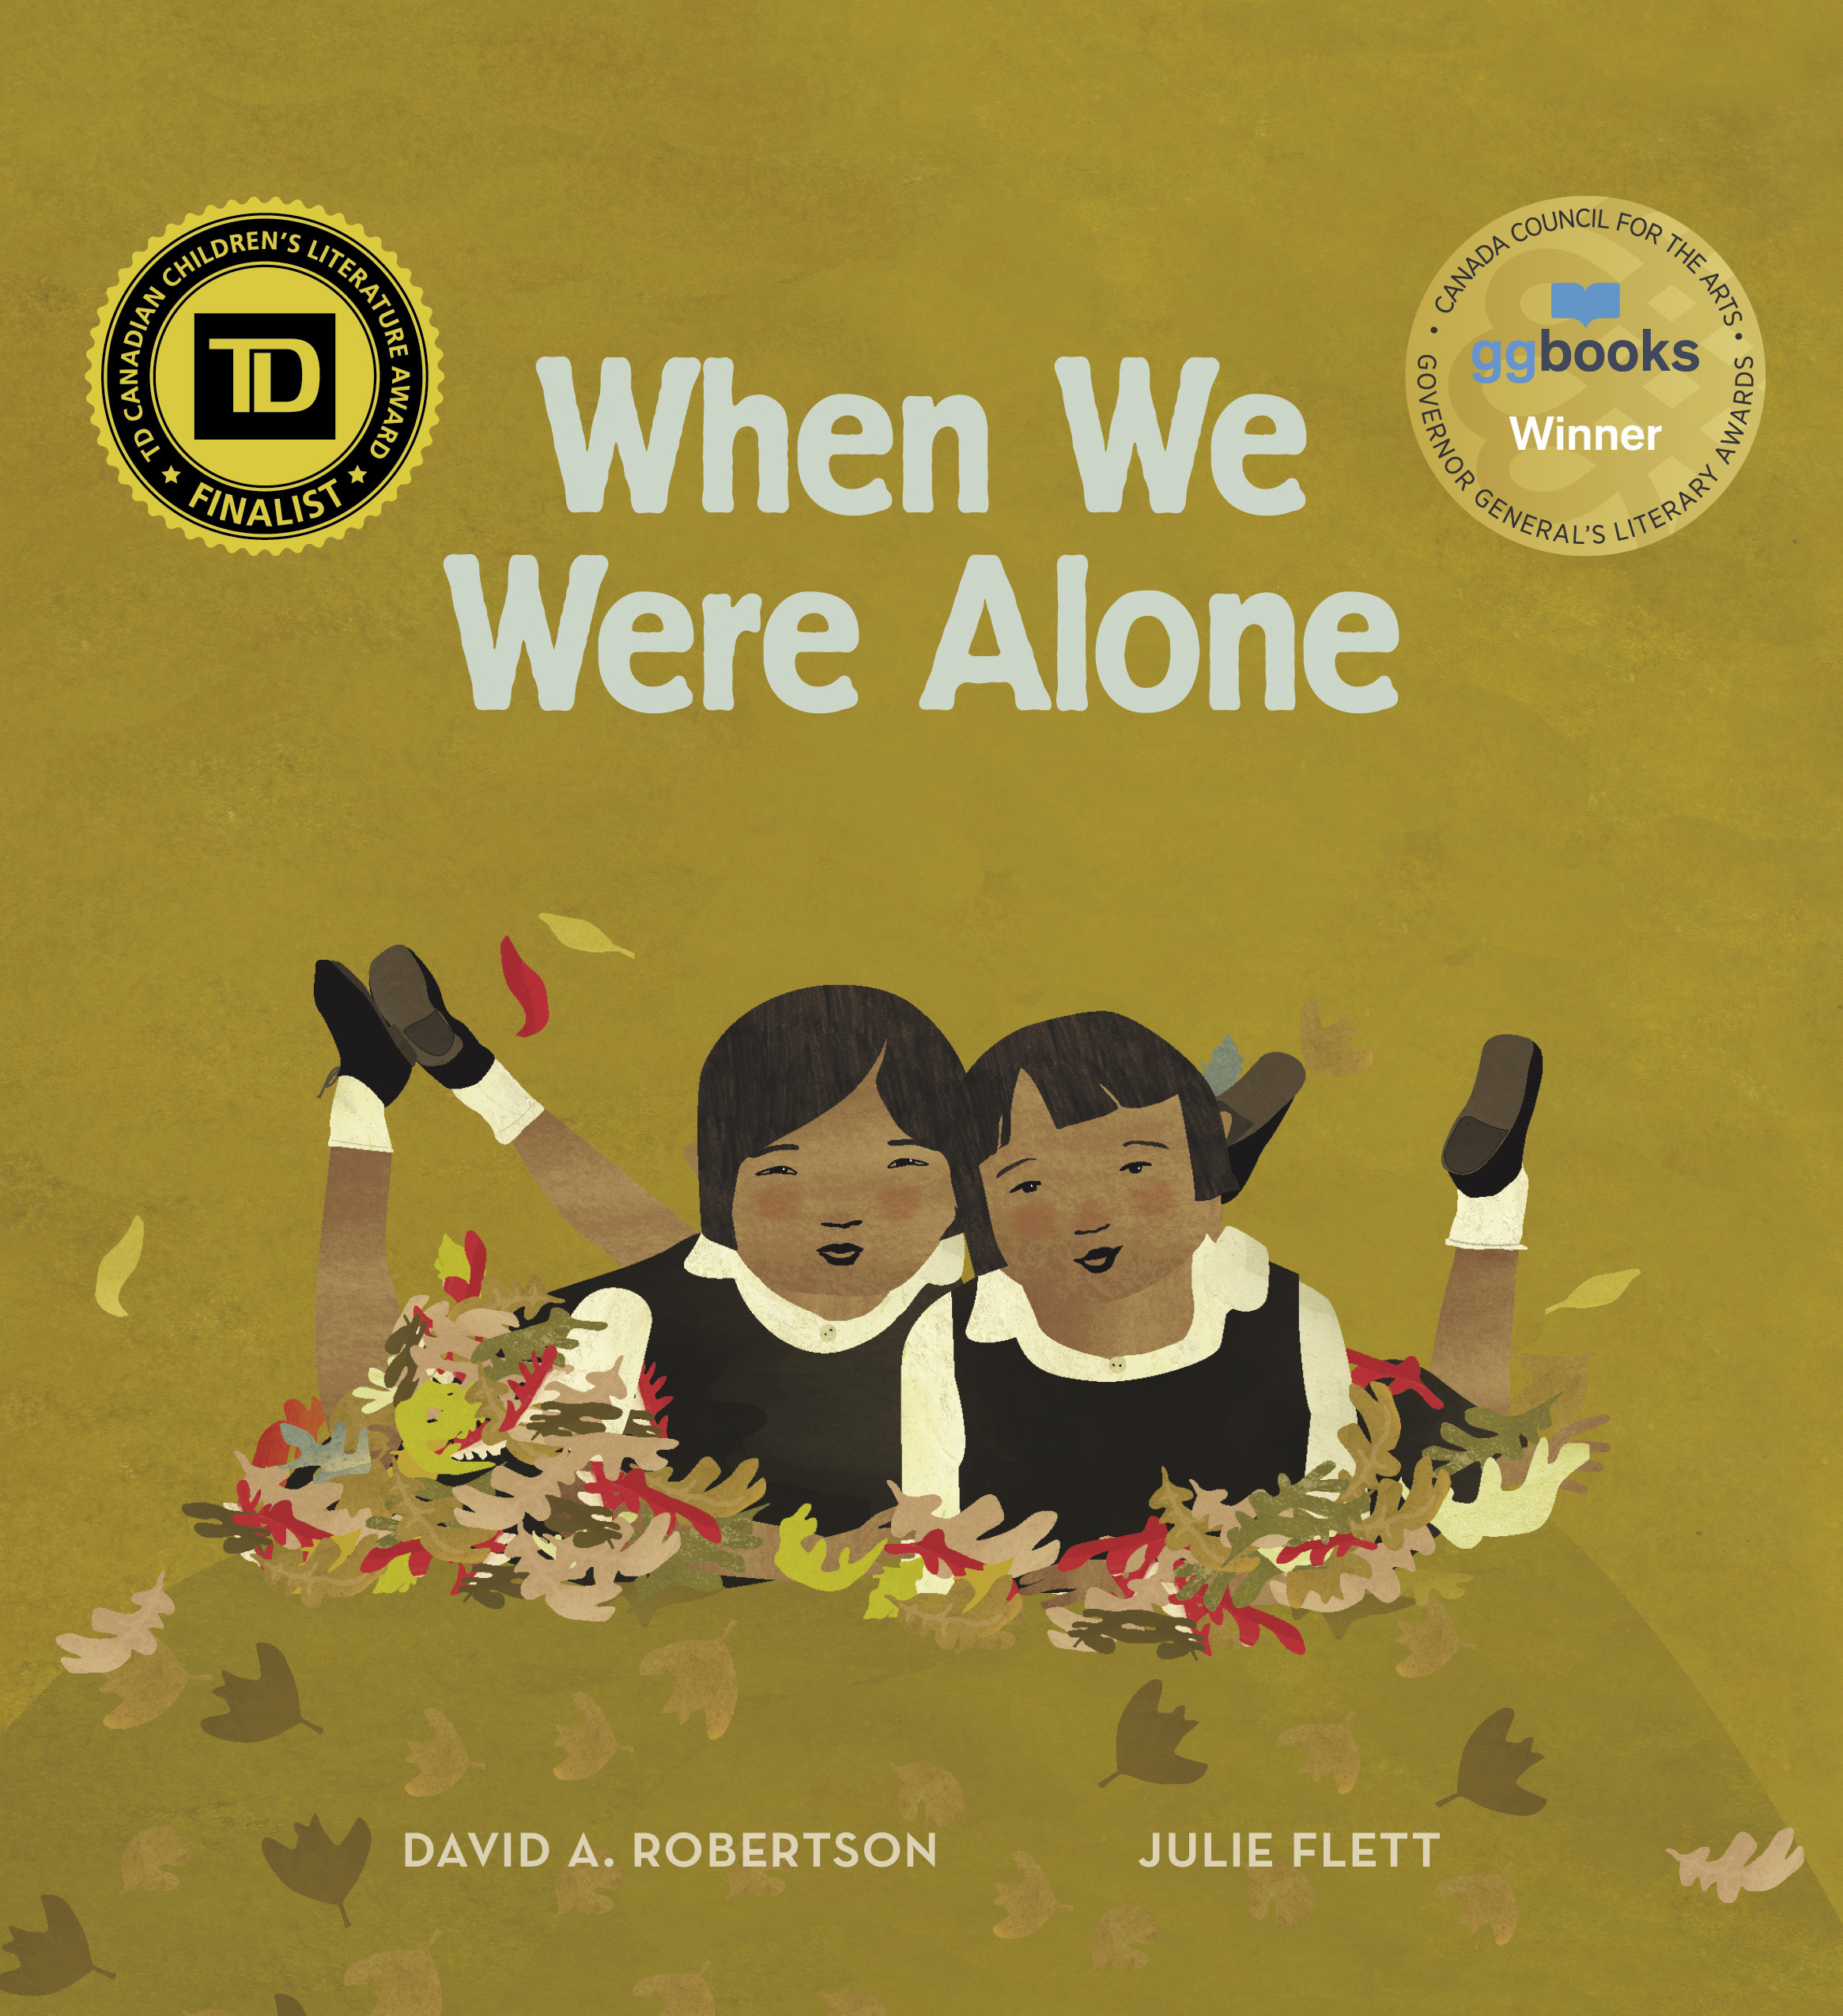 When We Were Alone by David Robertson and Julie Flett